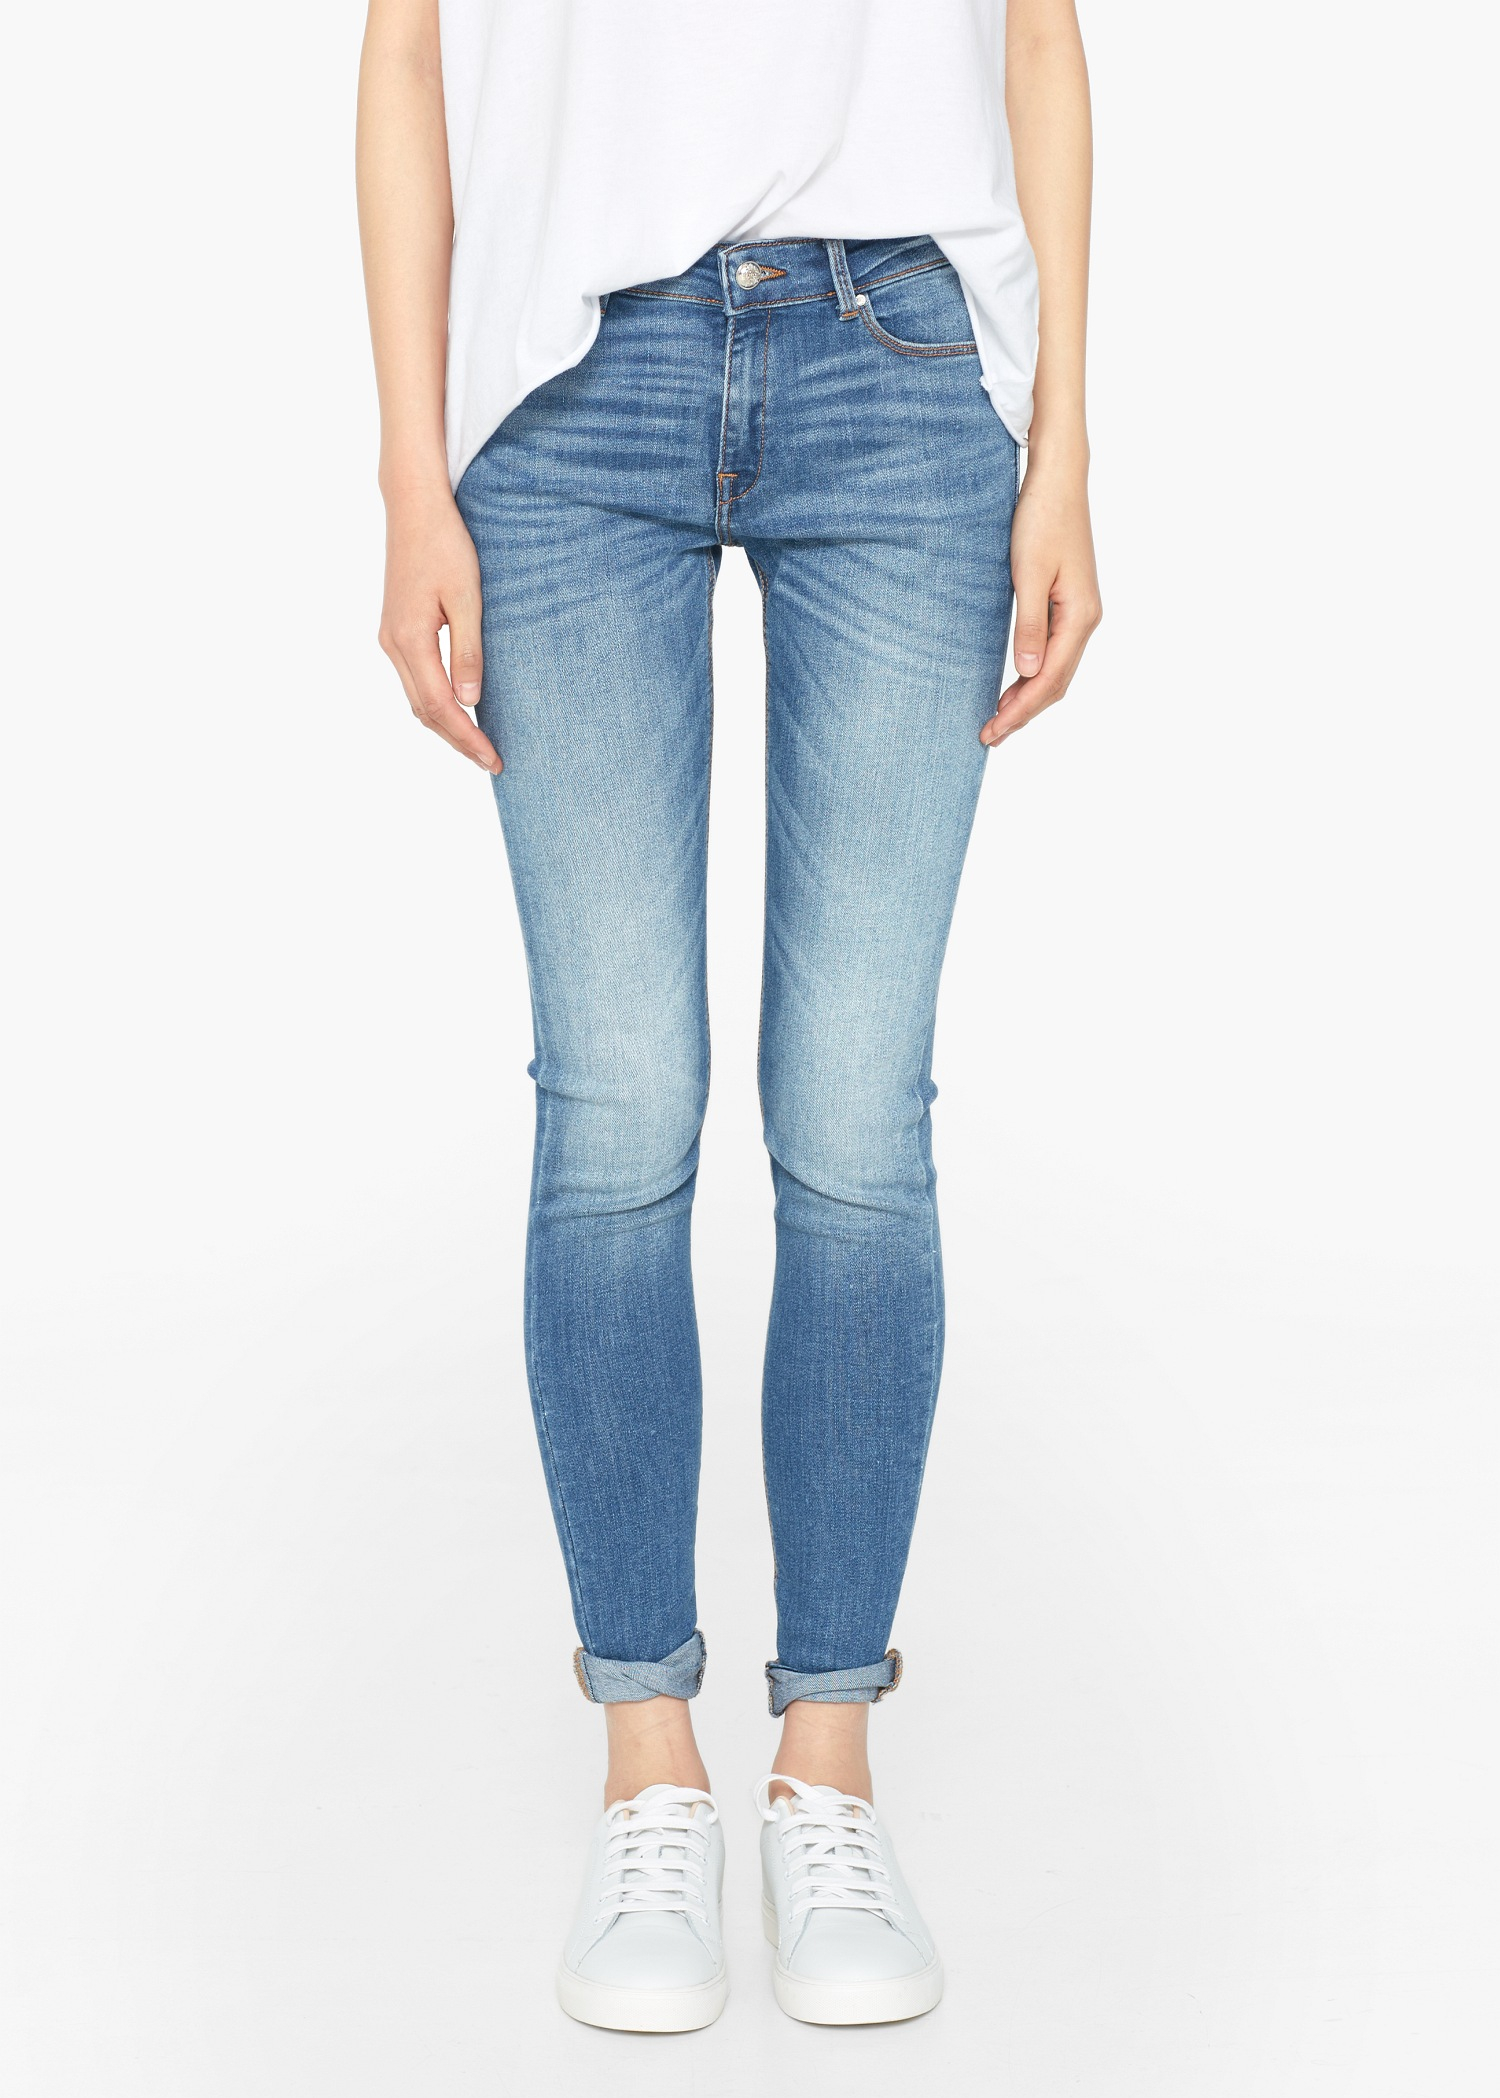 Lyst - Mango Skinny Olivia Jeans in Blue